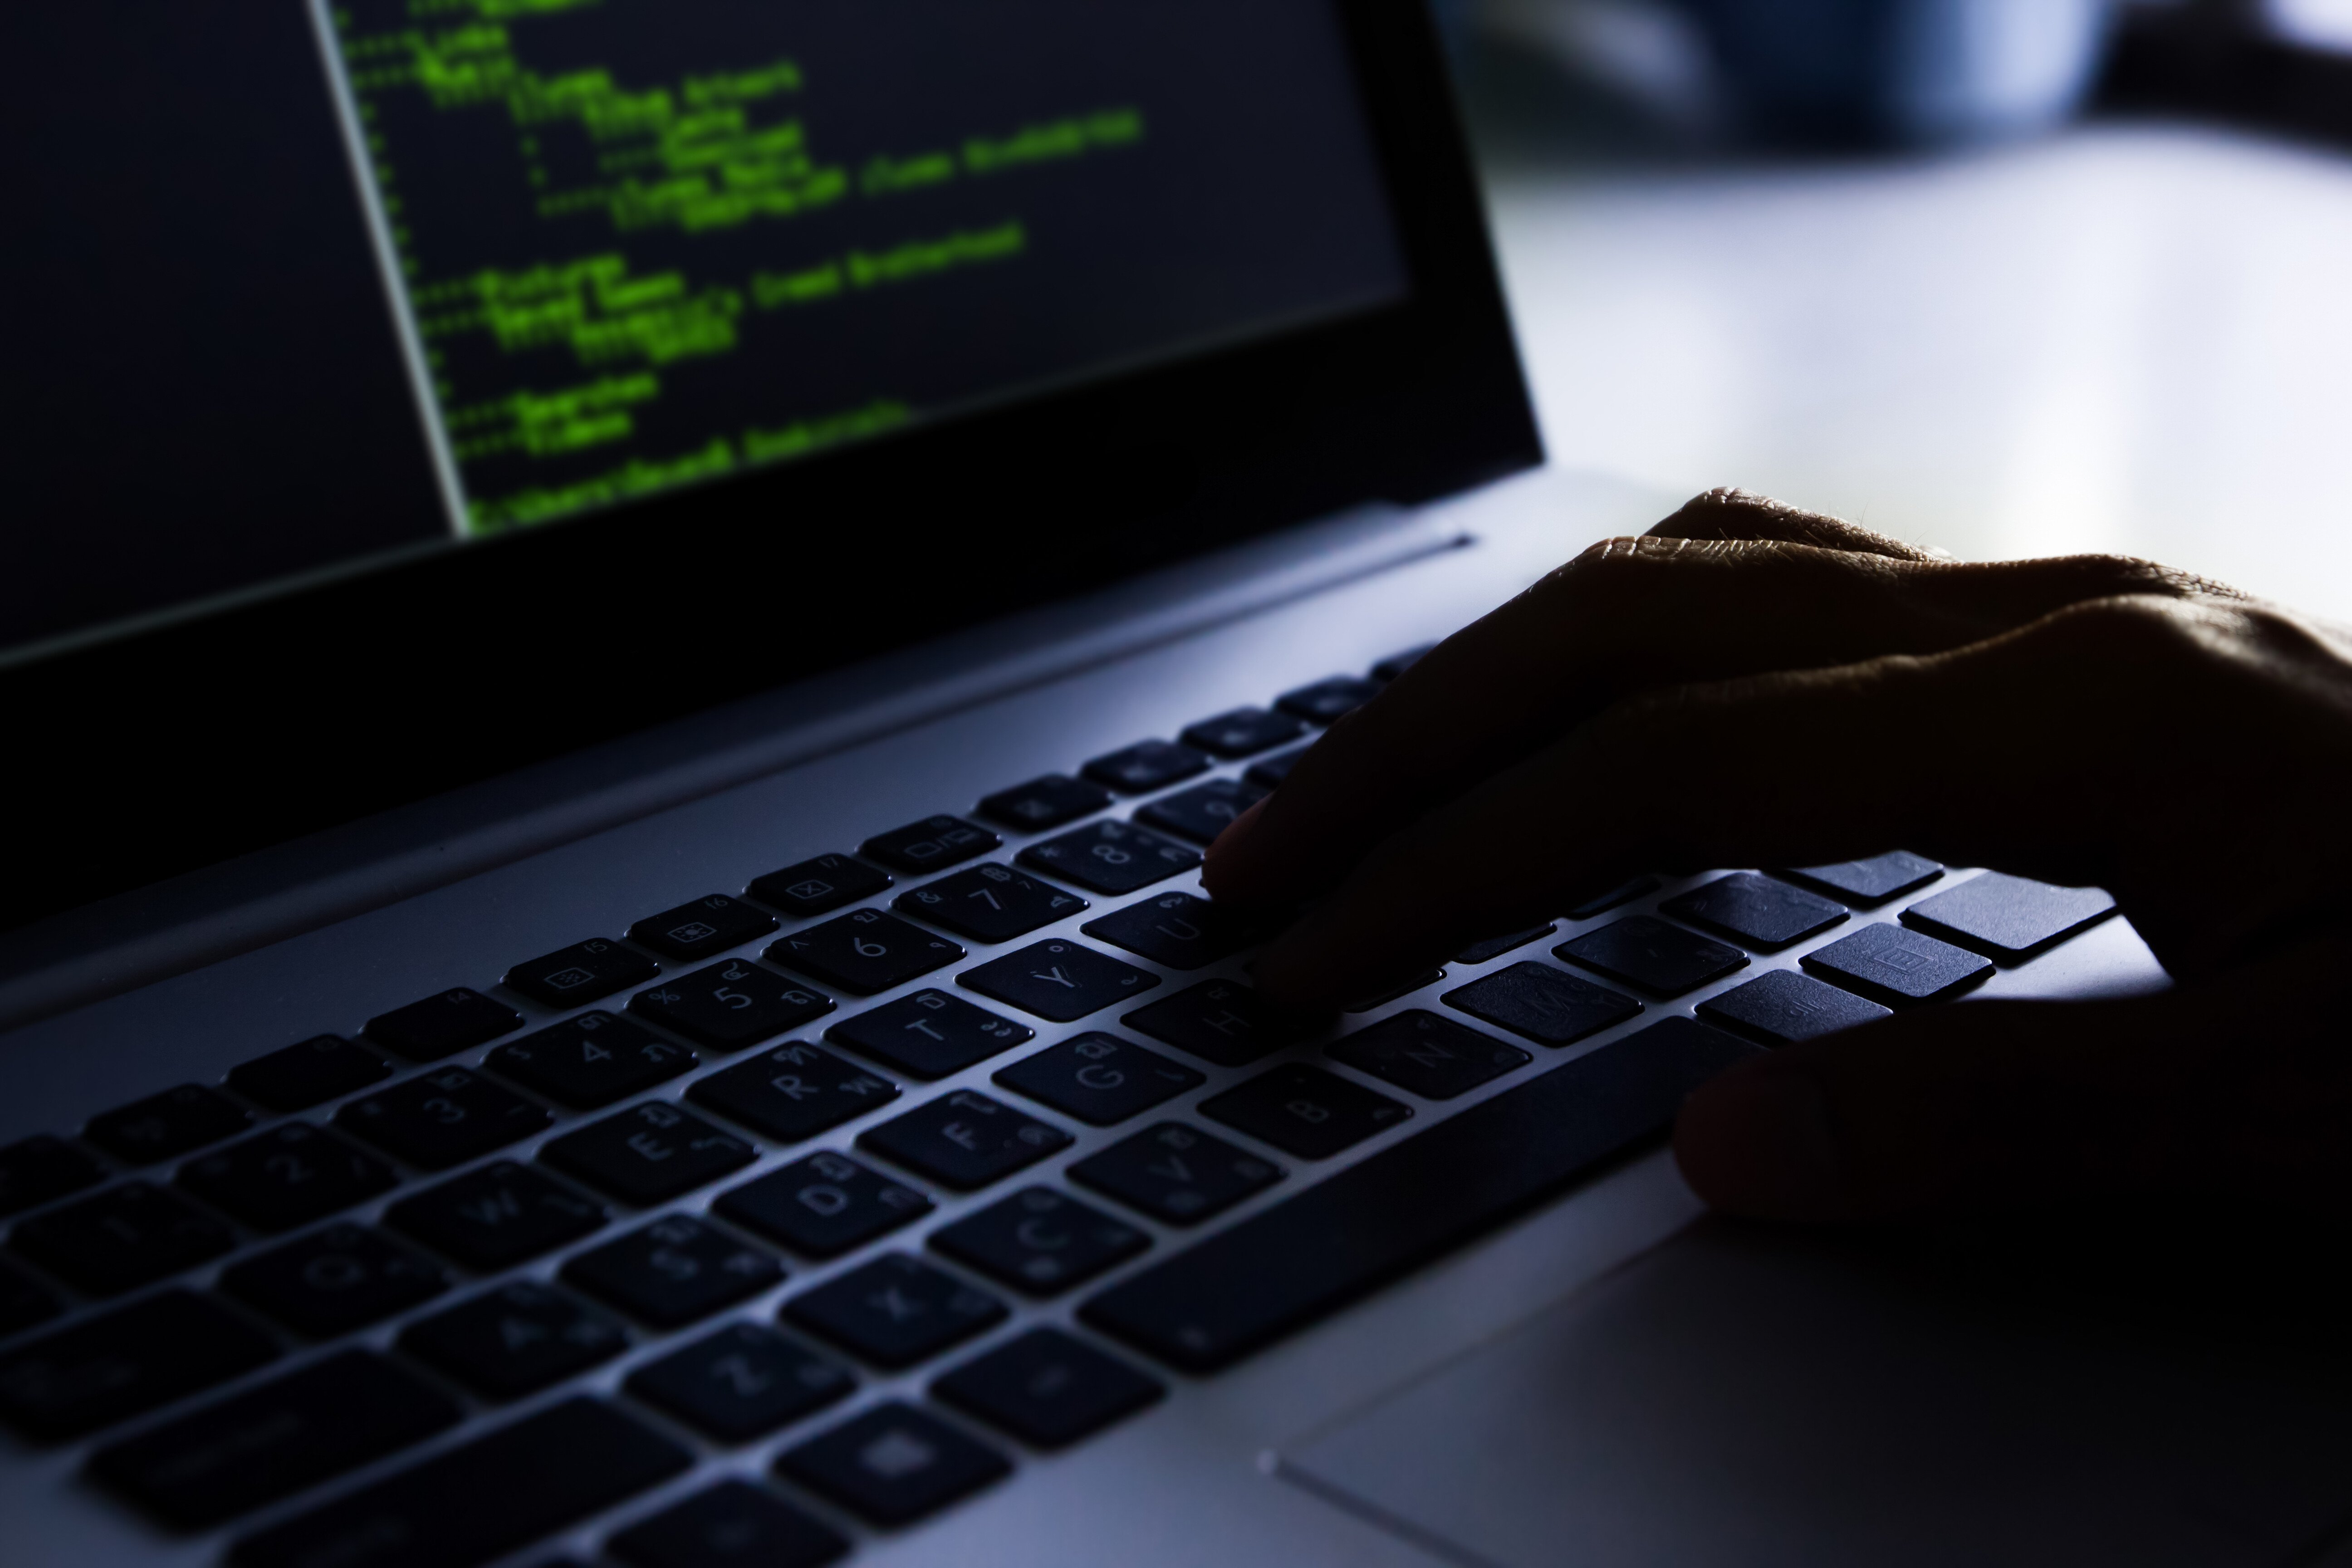 Cybercrime on laptop